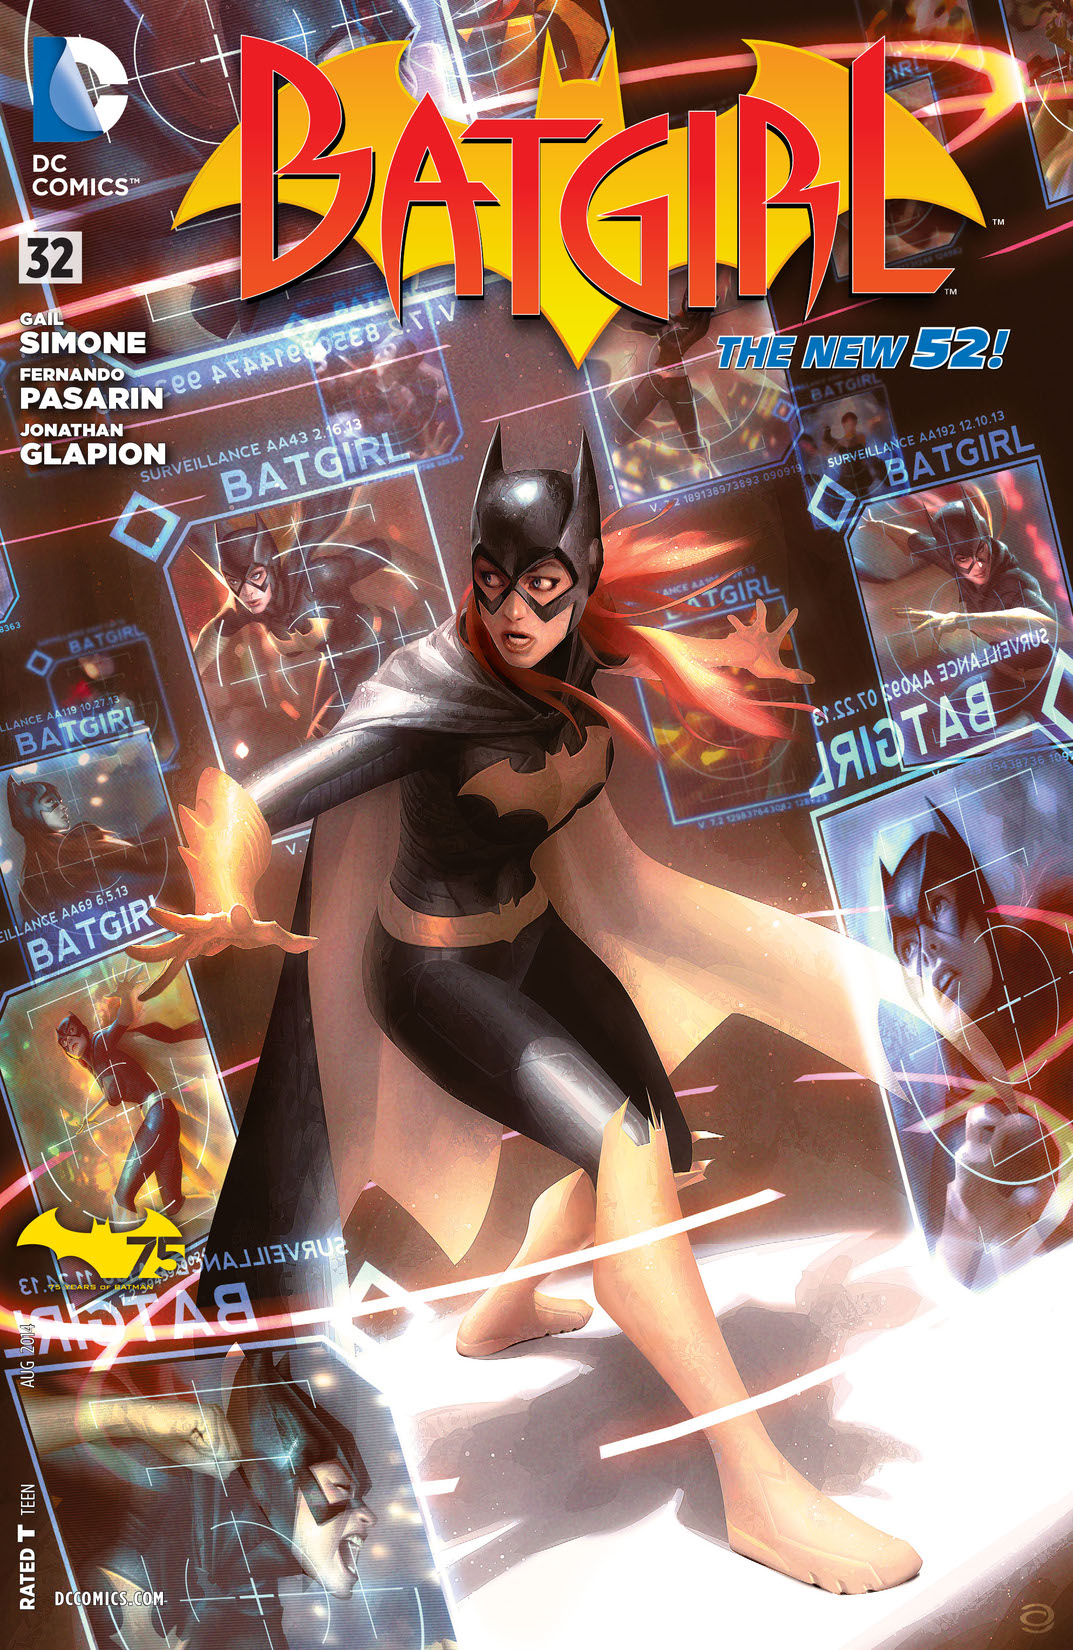 Batgirl (2011-) #32 preview images